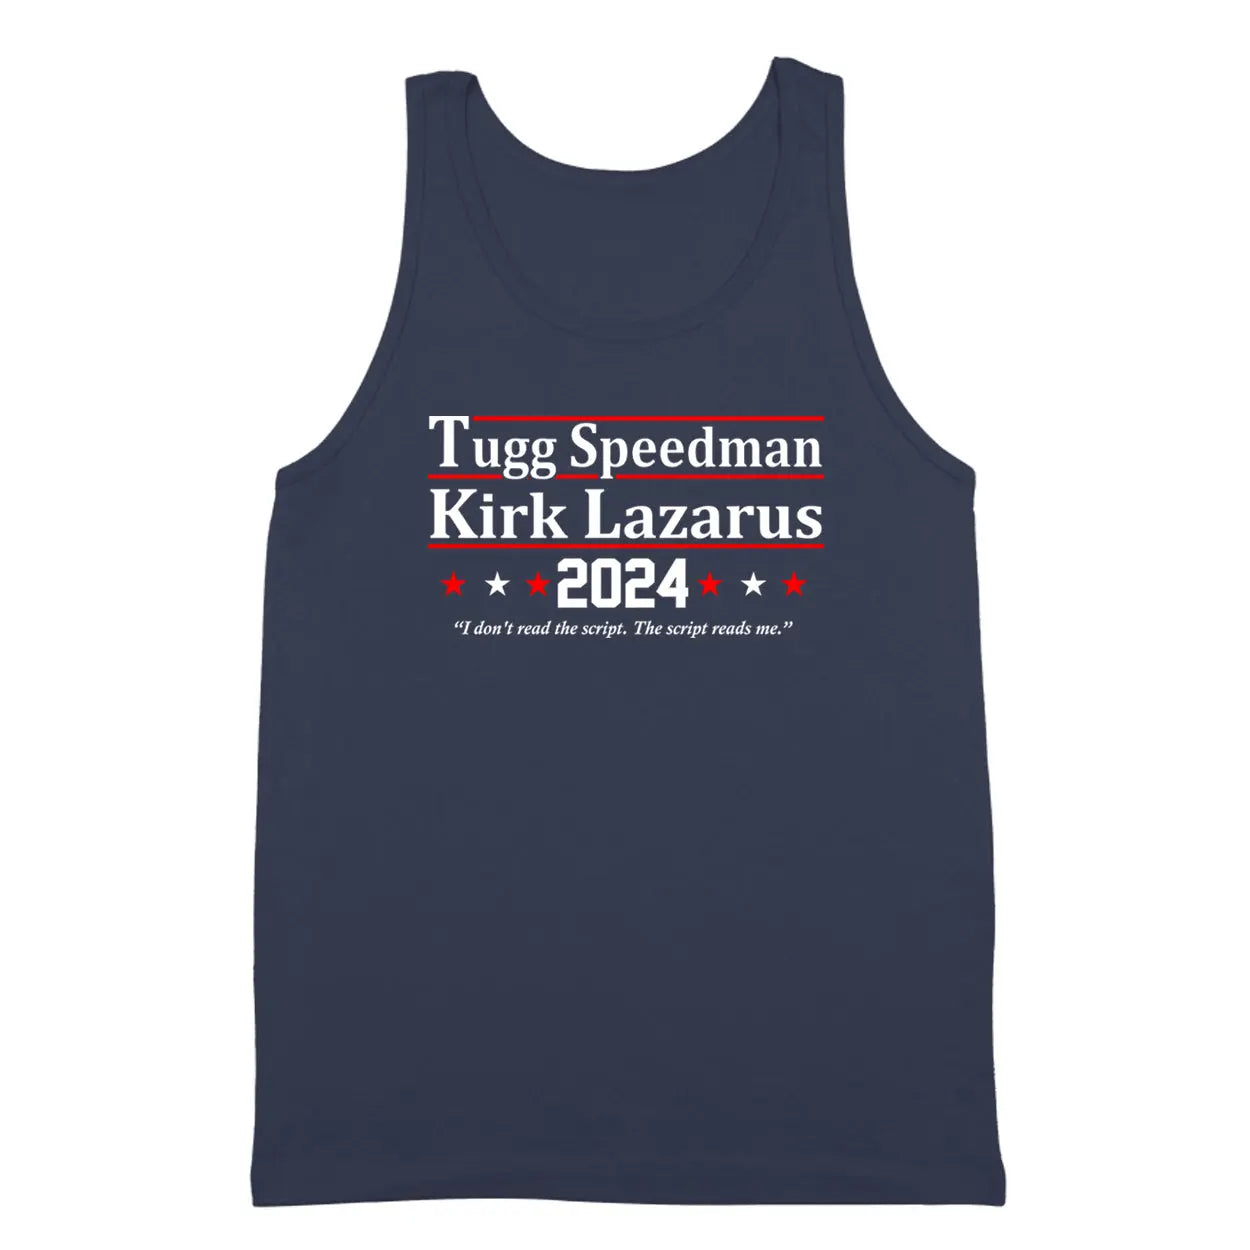 Tugg Speedman Kirk Lazarus 2024 Election Tshirt - Donkey Tees